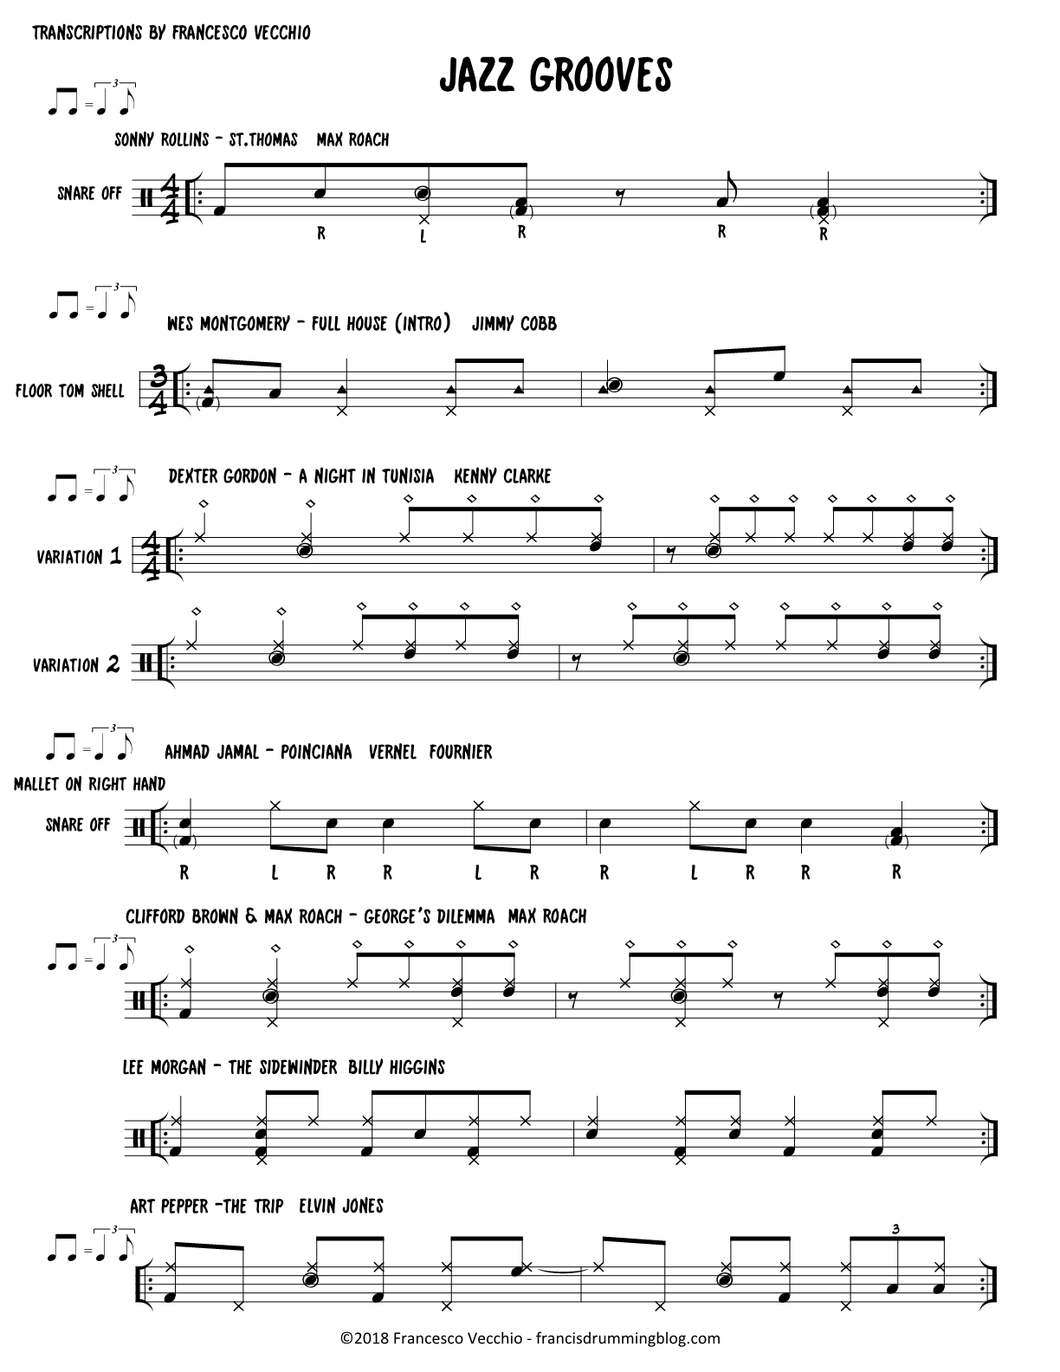 St. Thomas - Sonny Rollins - Collection of Drum Transcriptions / Drum Sheet Music - FrancisDrummingBlog.com